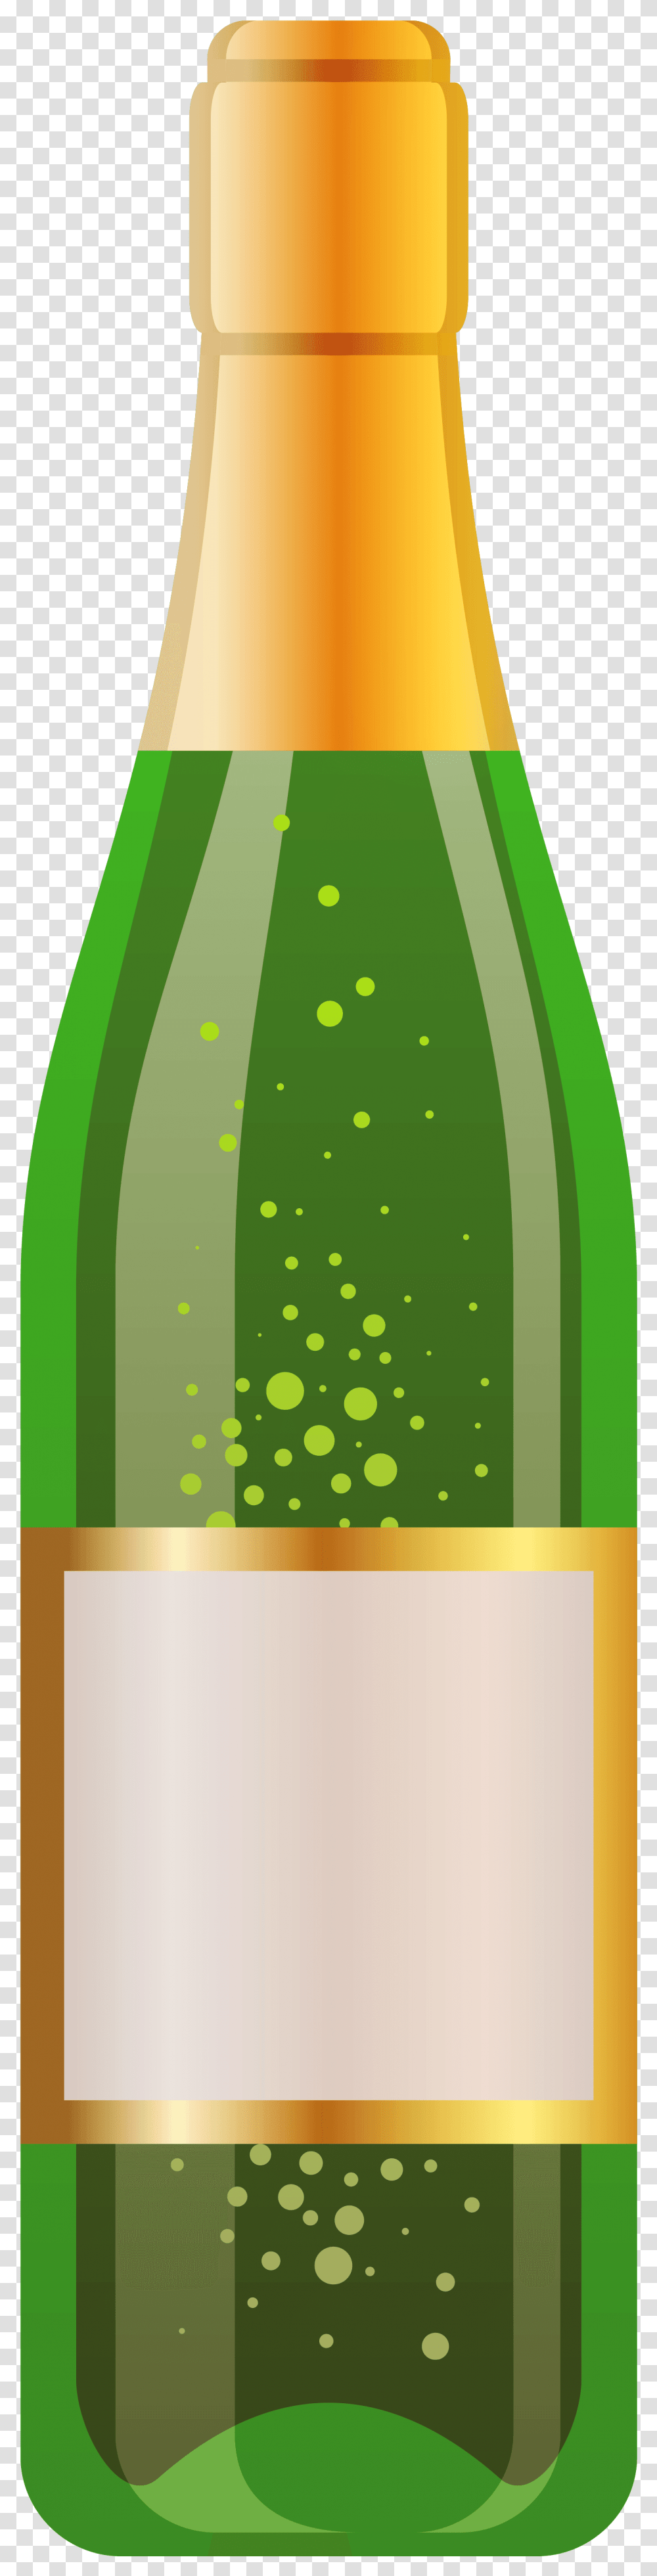 Bottle Of White Wine Vector Clipart, Beverage, Green, Alcohol, Pop Bottle Transparent Png